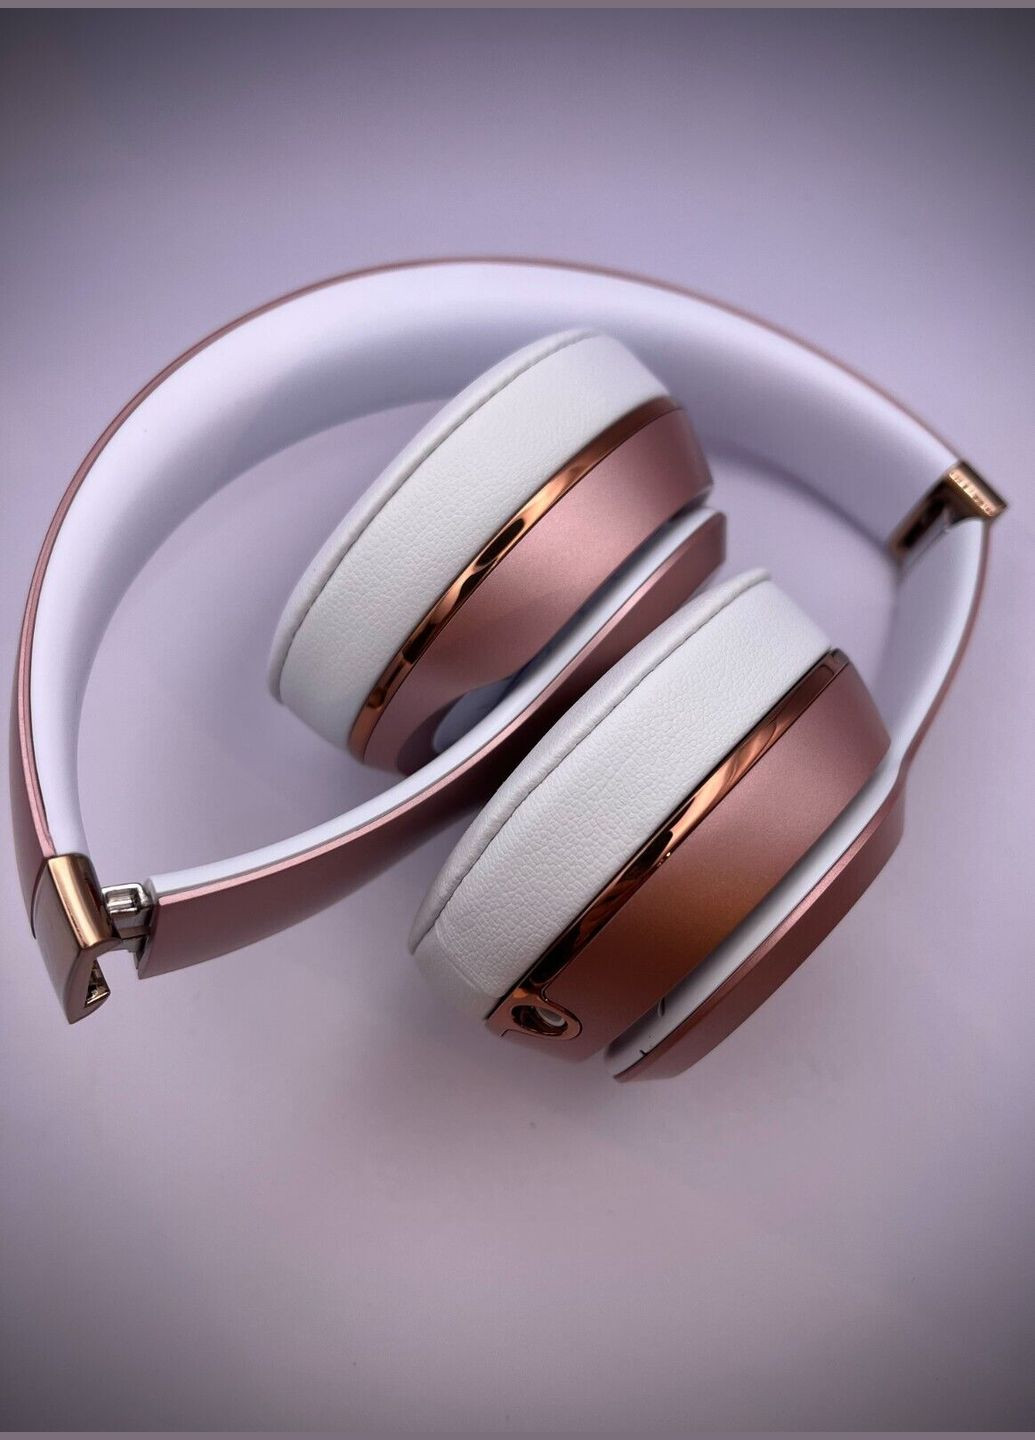 Бездротові навушники by Dr. Dre Solo3 Wireless OnEar Headphones Rose Gold (пошкоджена коробка) BEATS (293153742)